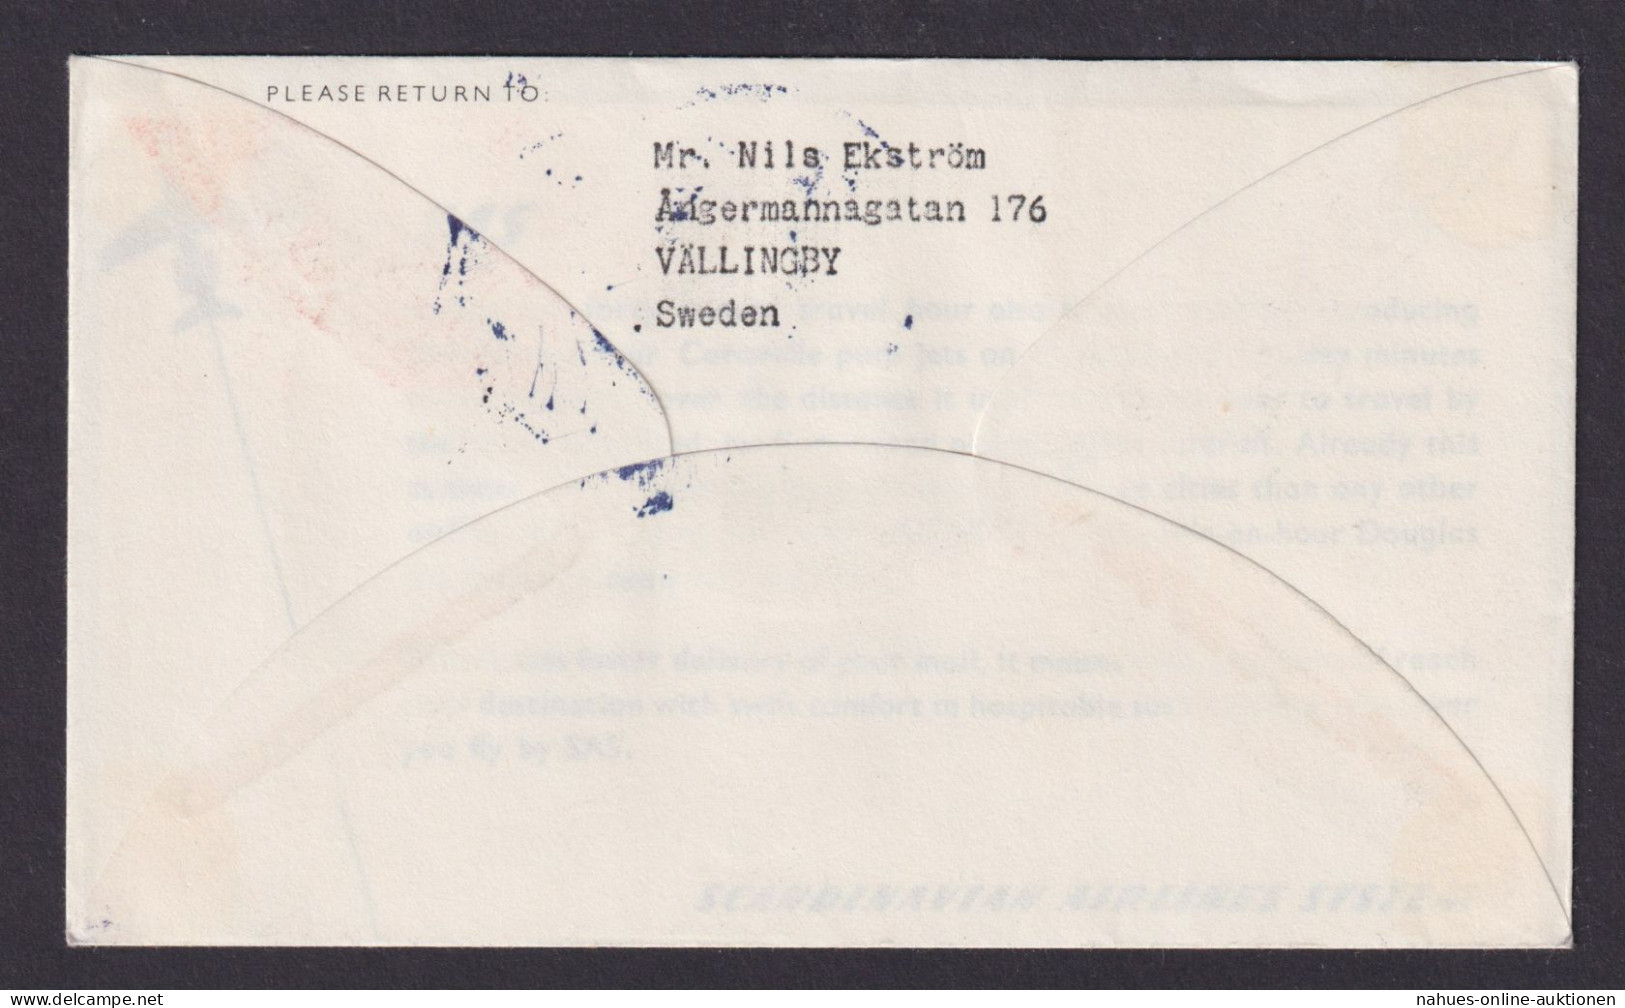 Flugpost Brief SAS Erstflug Caravelle Destination Stockholm Schweden Dhahran - Storia Postale